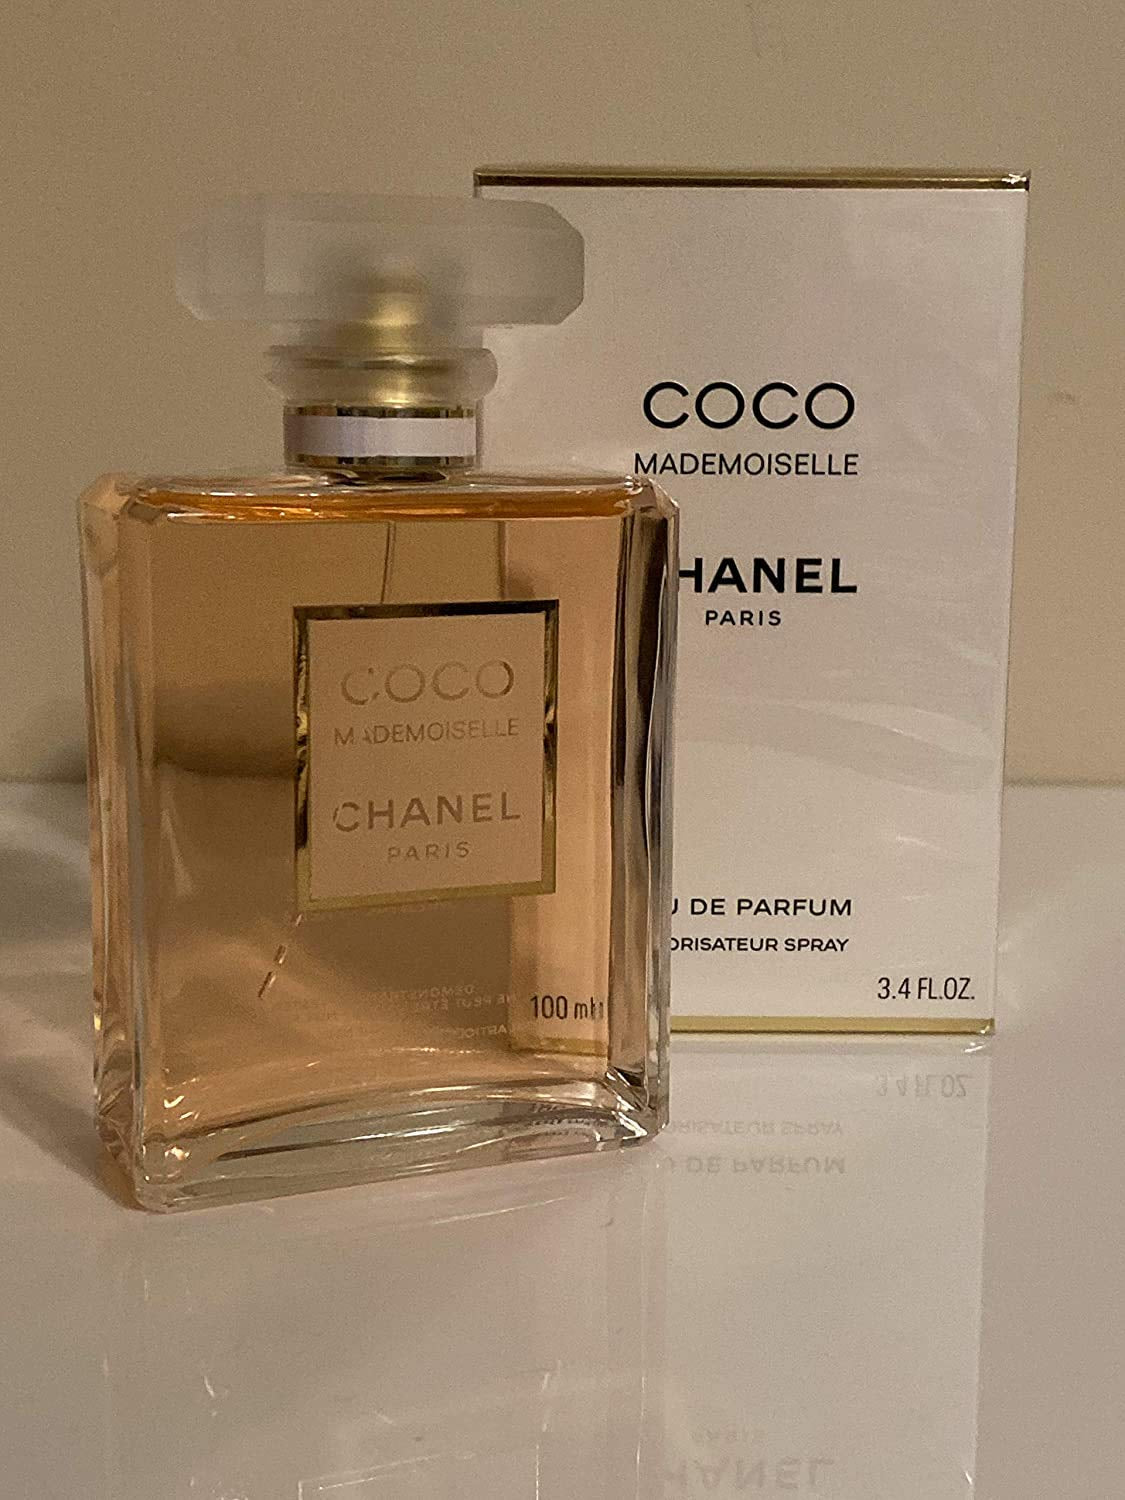 Chânel Coco Mademoiselle Eau De Parfum Spray for Woman, EDP 3.4